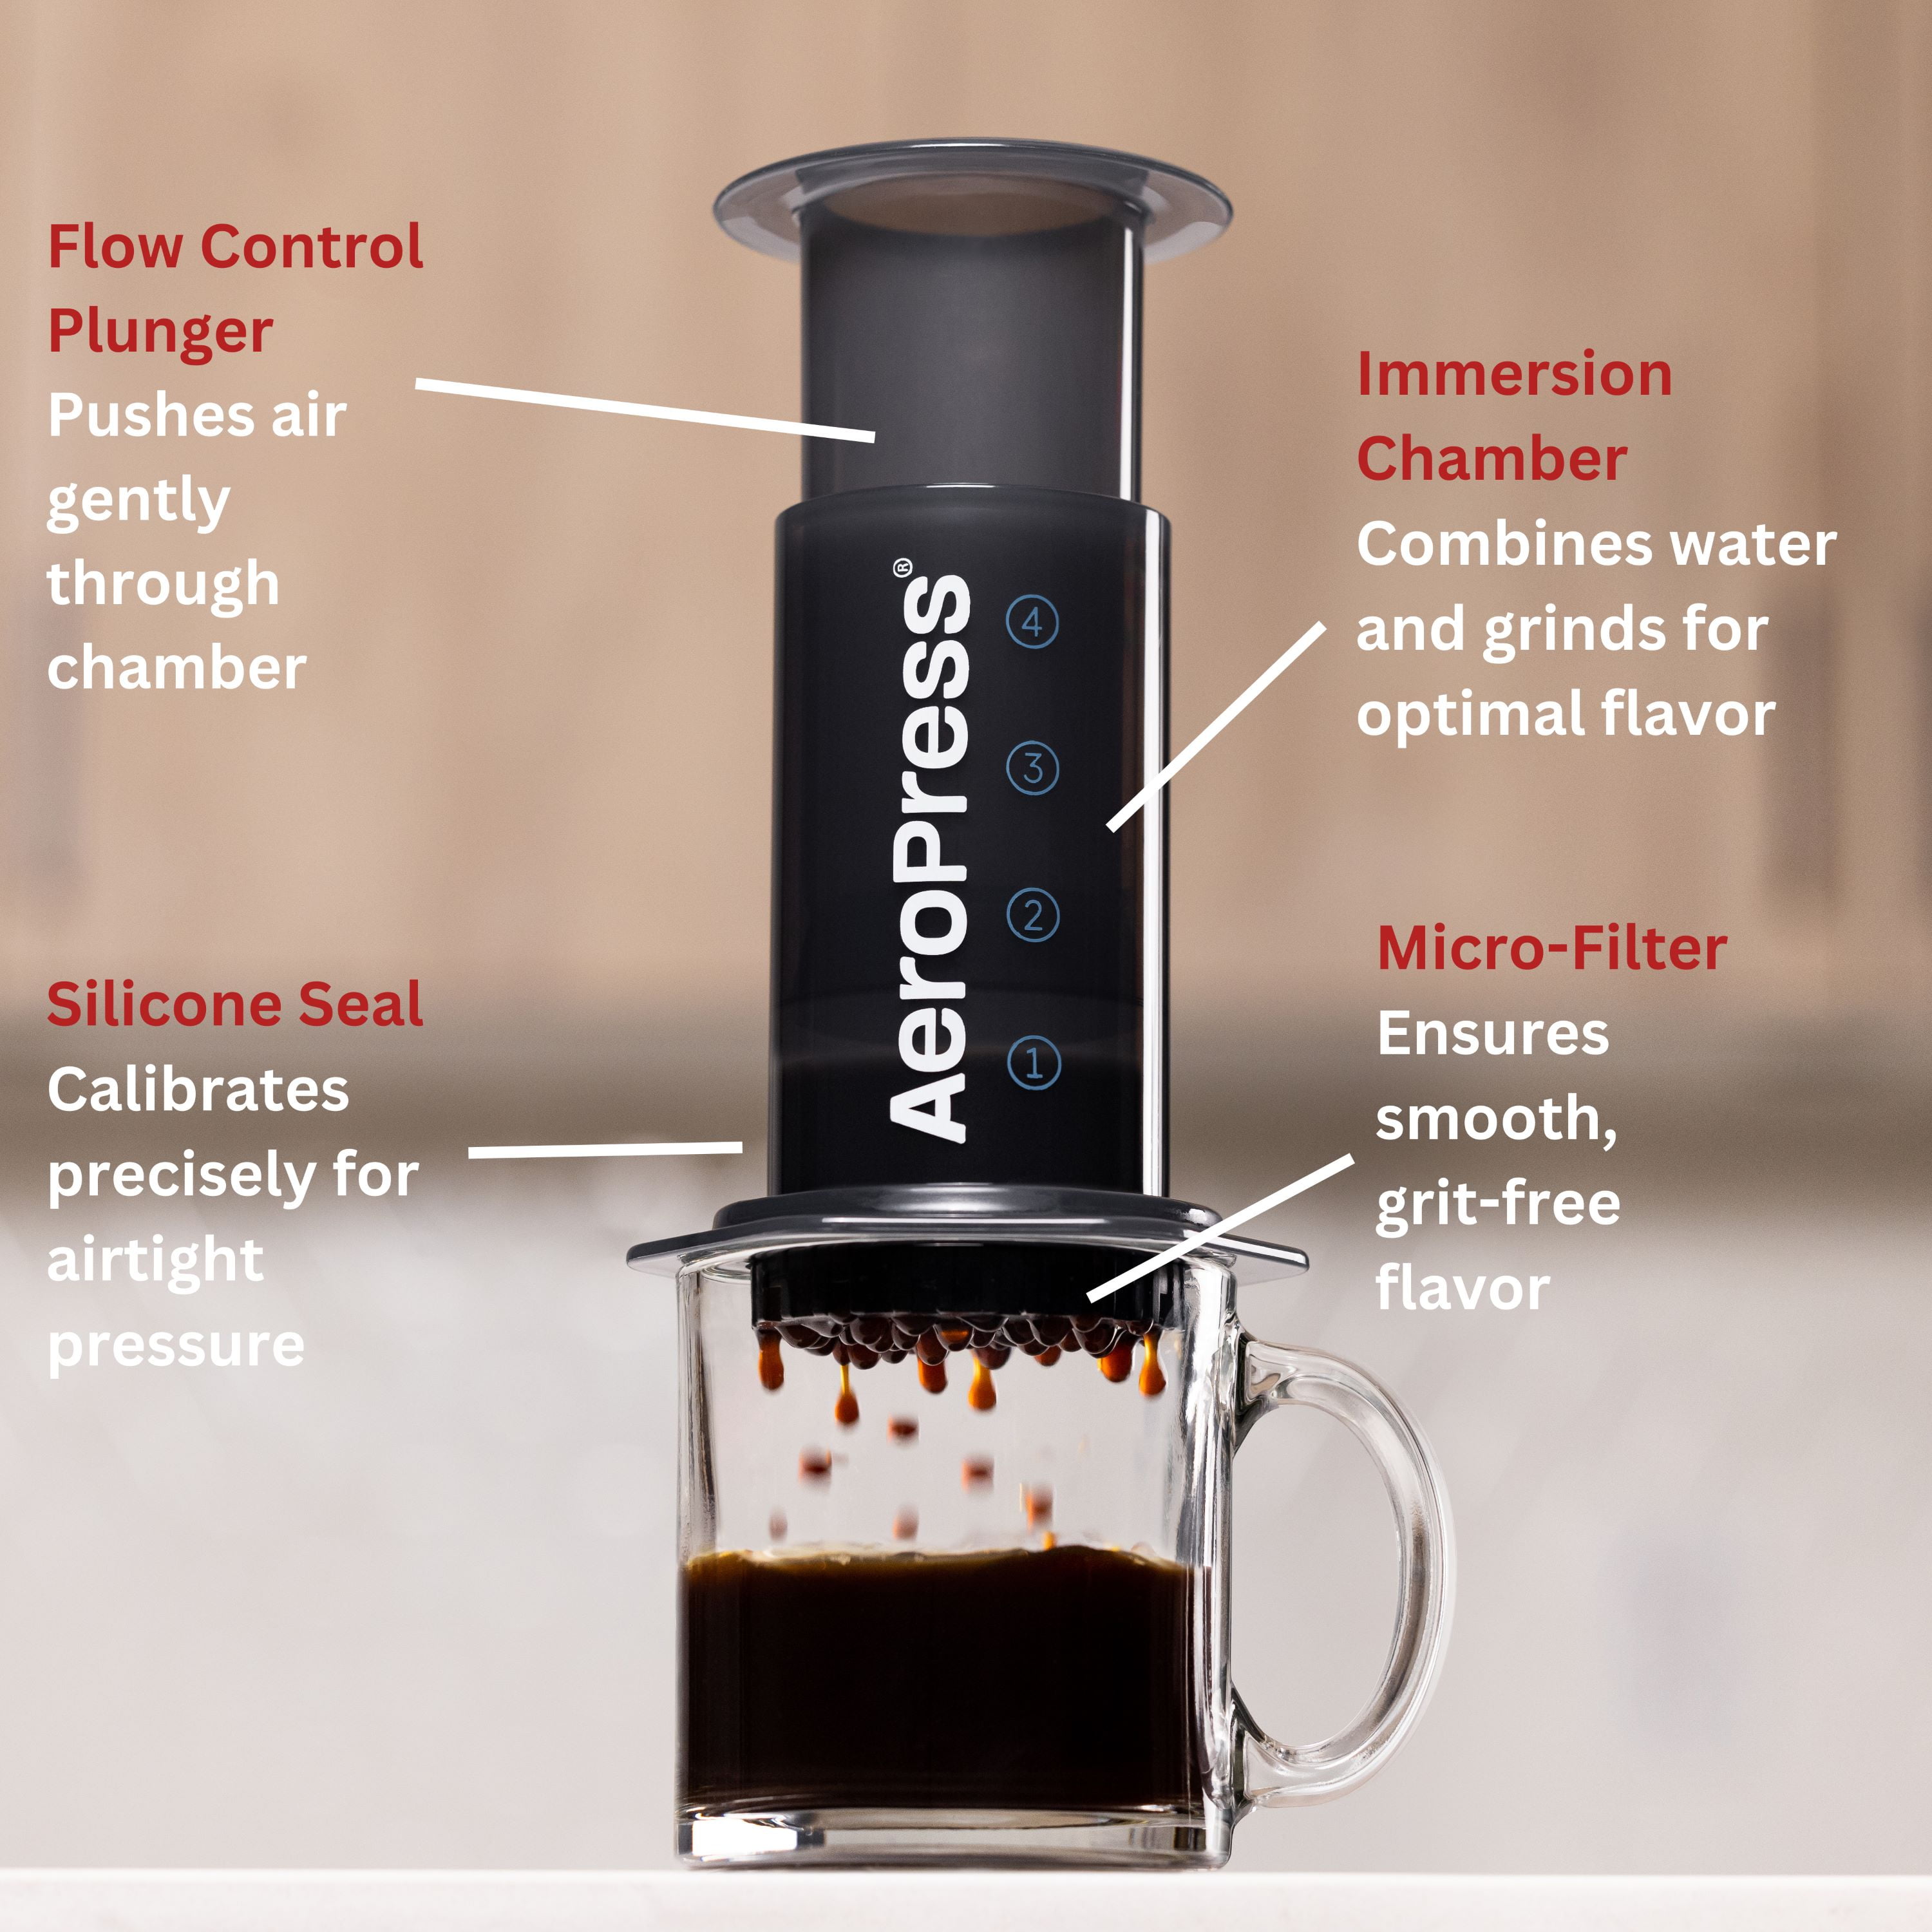  Aeropress Original Coffee and Espresso Maker, Barista Level  Portable Coffee Maker with Chamber, Plunger, & Filters, Quick Coffee and  Espresso Maker, Made in USA : Home & Kitchen